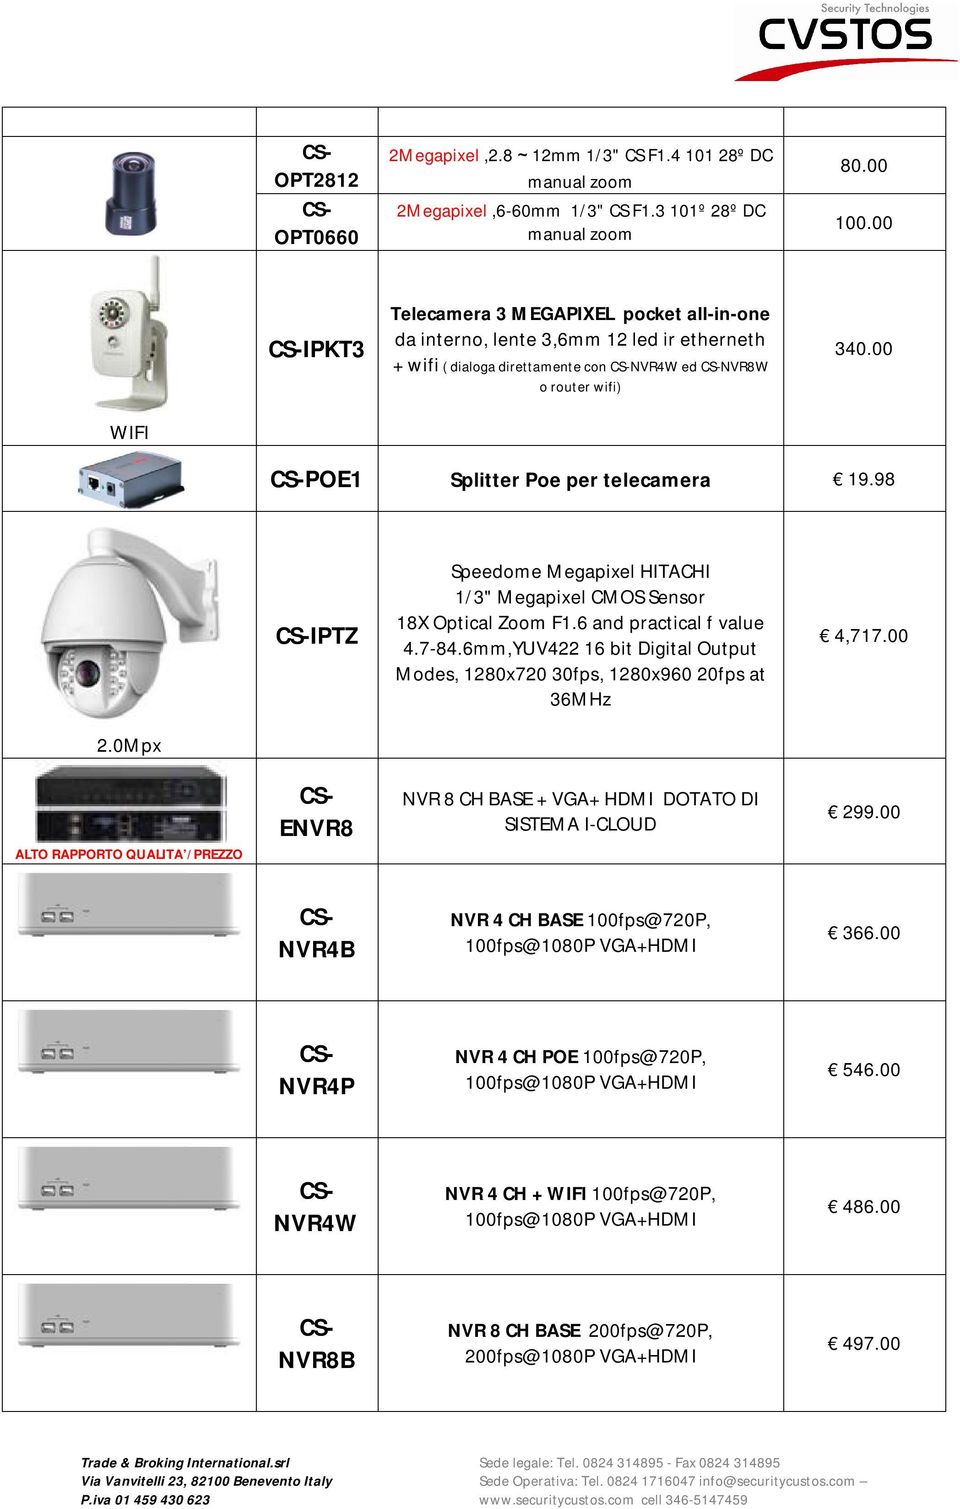 00 WIFI POE1 Splitter Poe per telecamera 19.98 IPTZ Speedome Megapixel HITACHI 1/3" Megapixel CMOS Sensor 18X Optical Zoom F1.6 and practical f value 4.7-84.